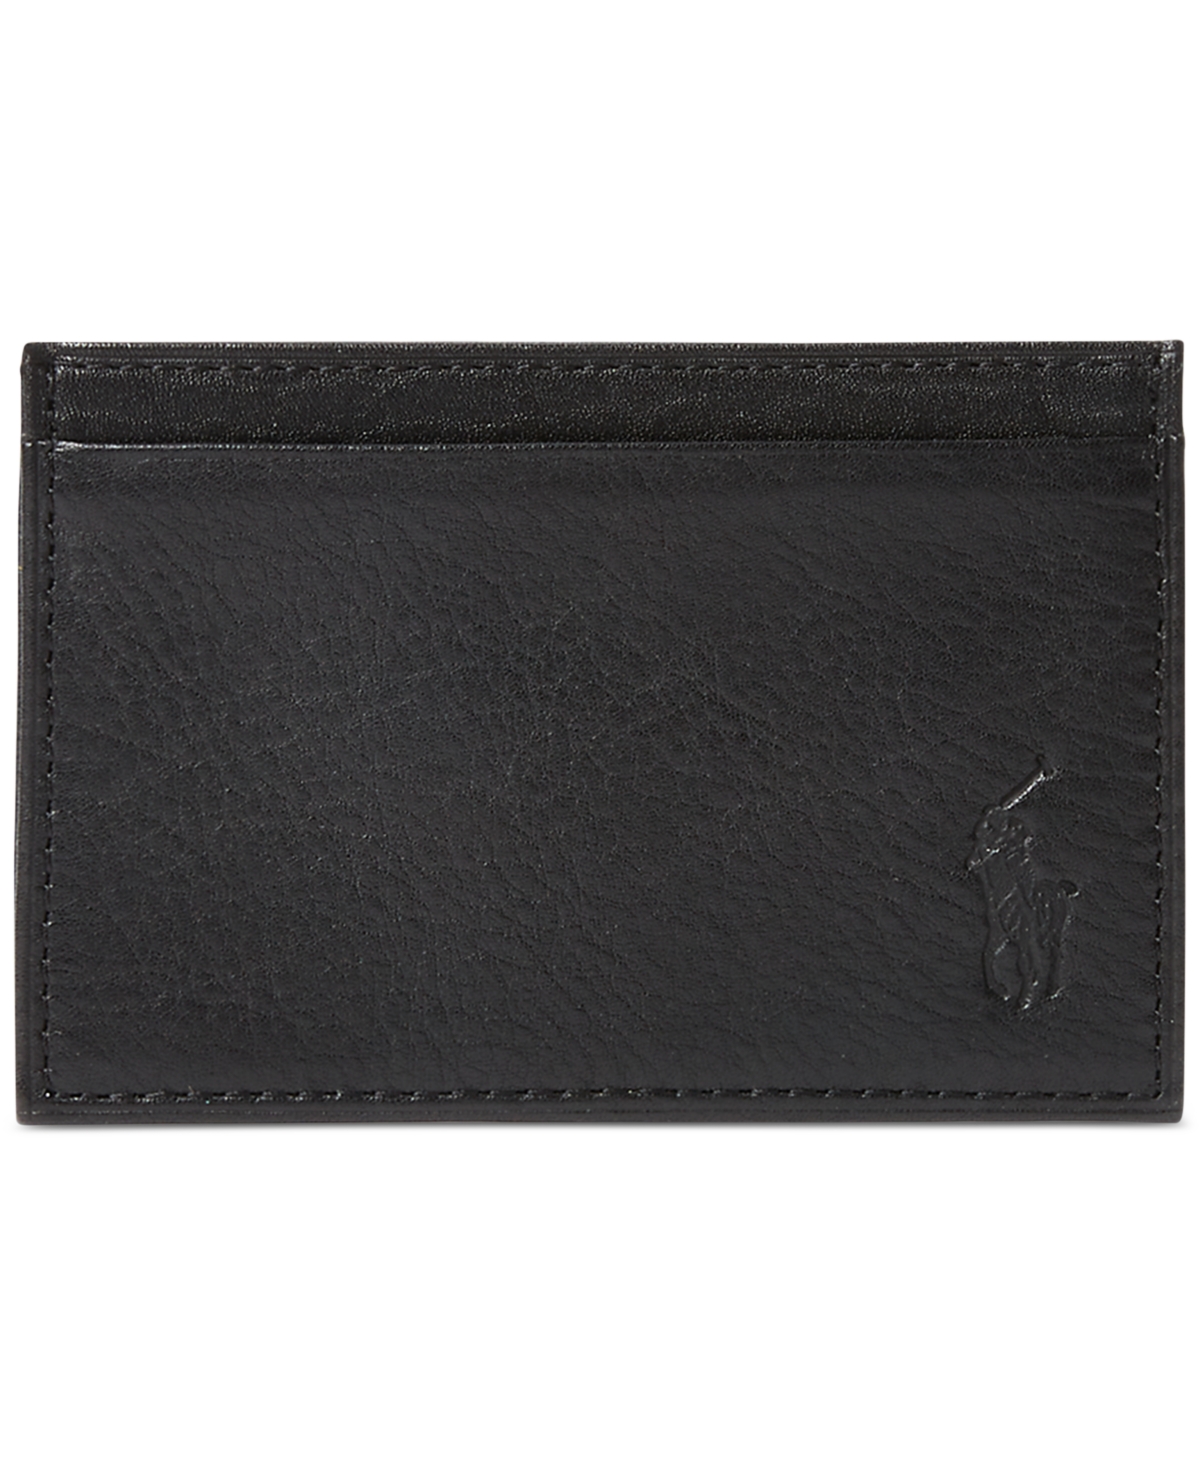 Men's Pebbled Leather Card Case - Black